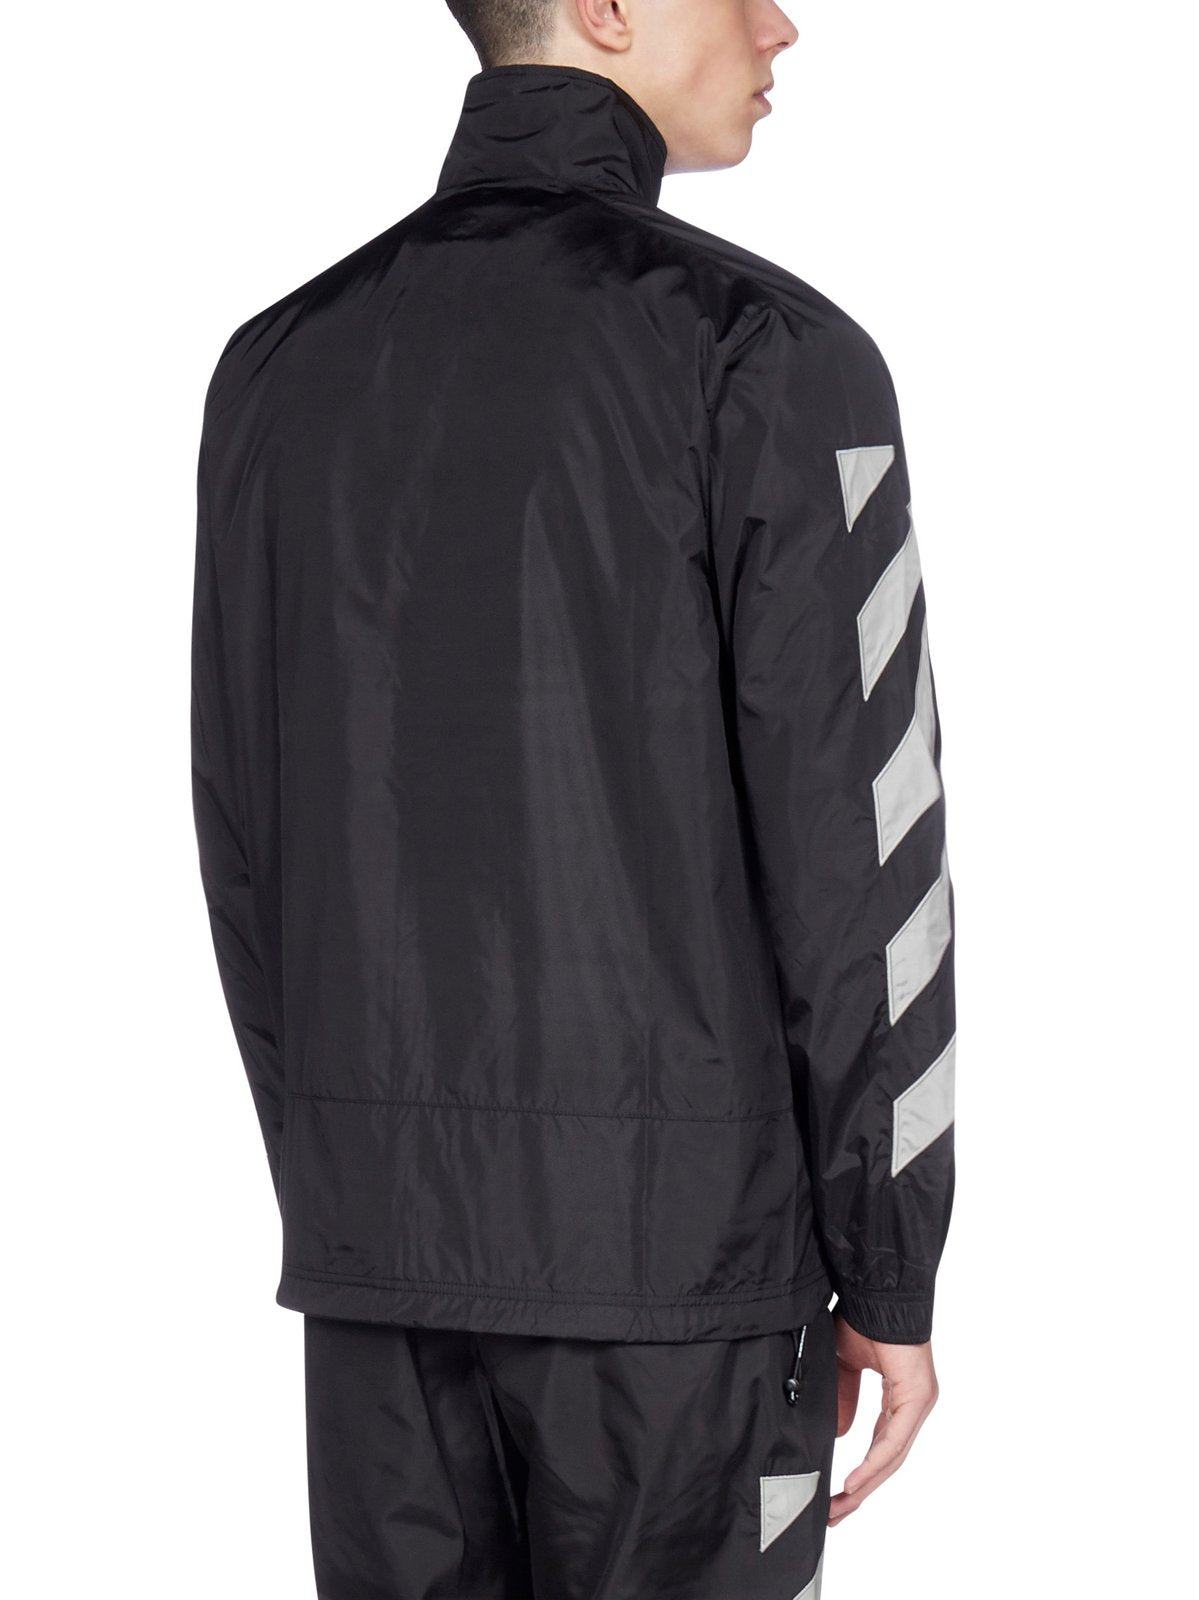 Off-White Diagonal Striped Track Jacket